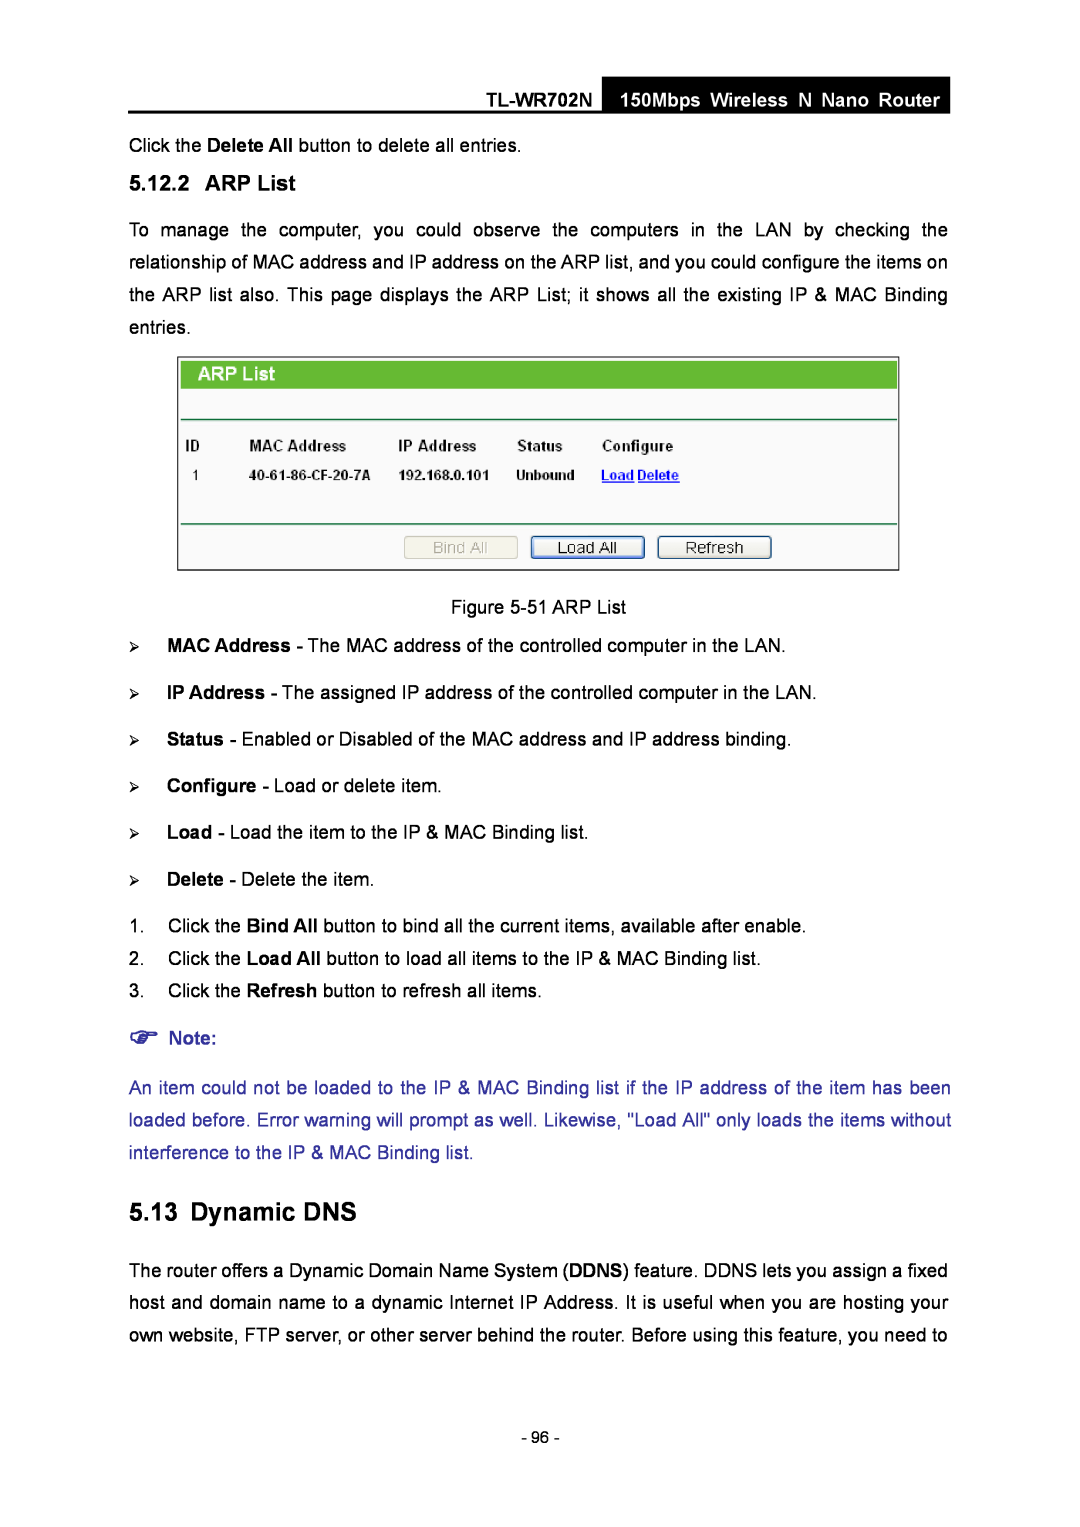 TP-Link manual Dynamic DNS, ARP List, TL-WR702N 150Mbps Wireless N Nano Router 